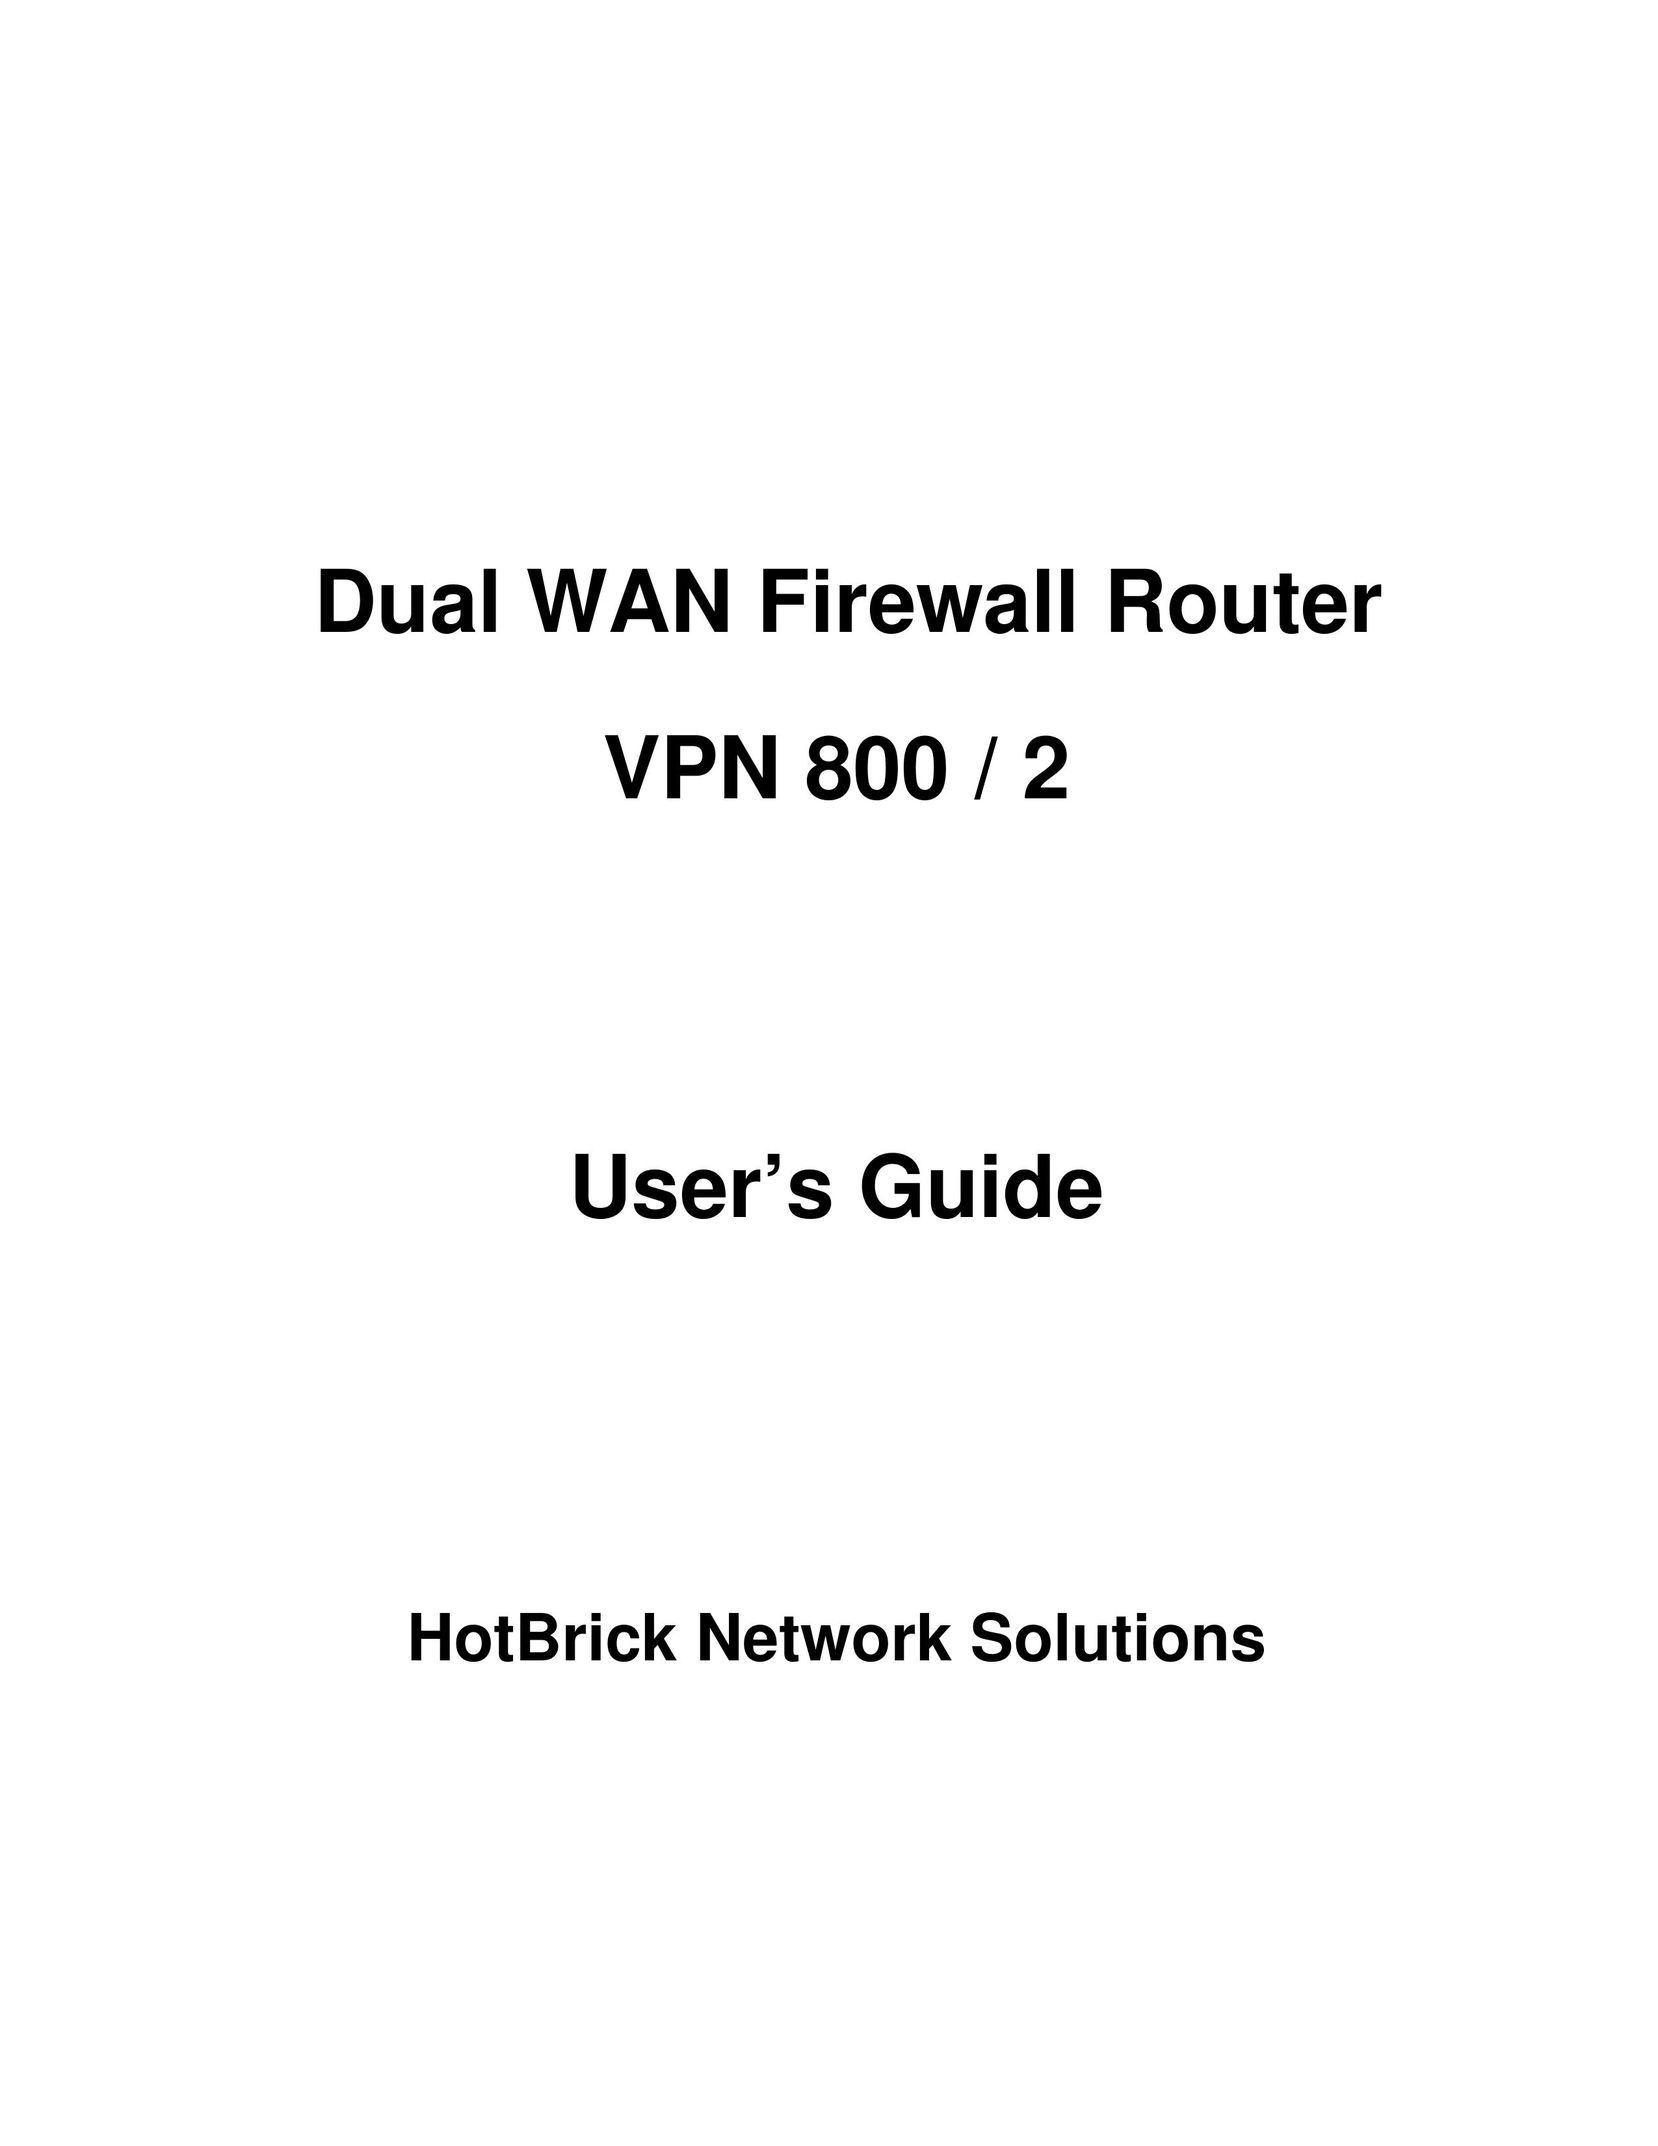 HotBrick VPN 800 / 2 Network Router User Manual